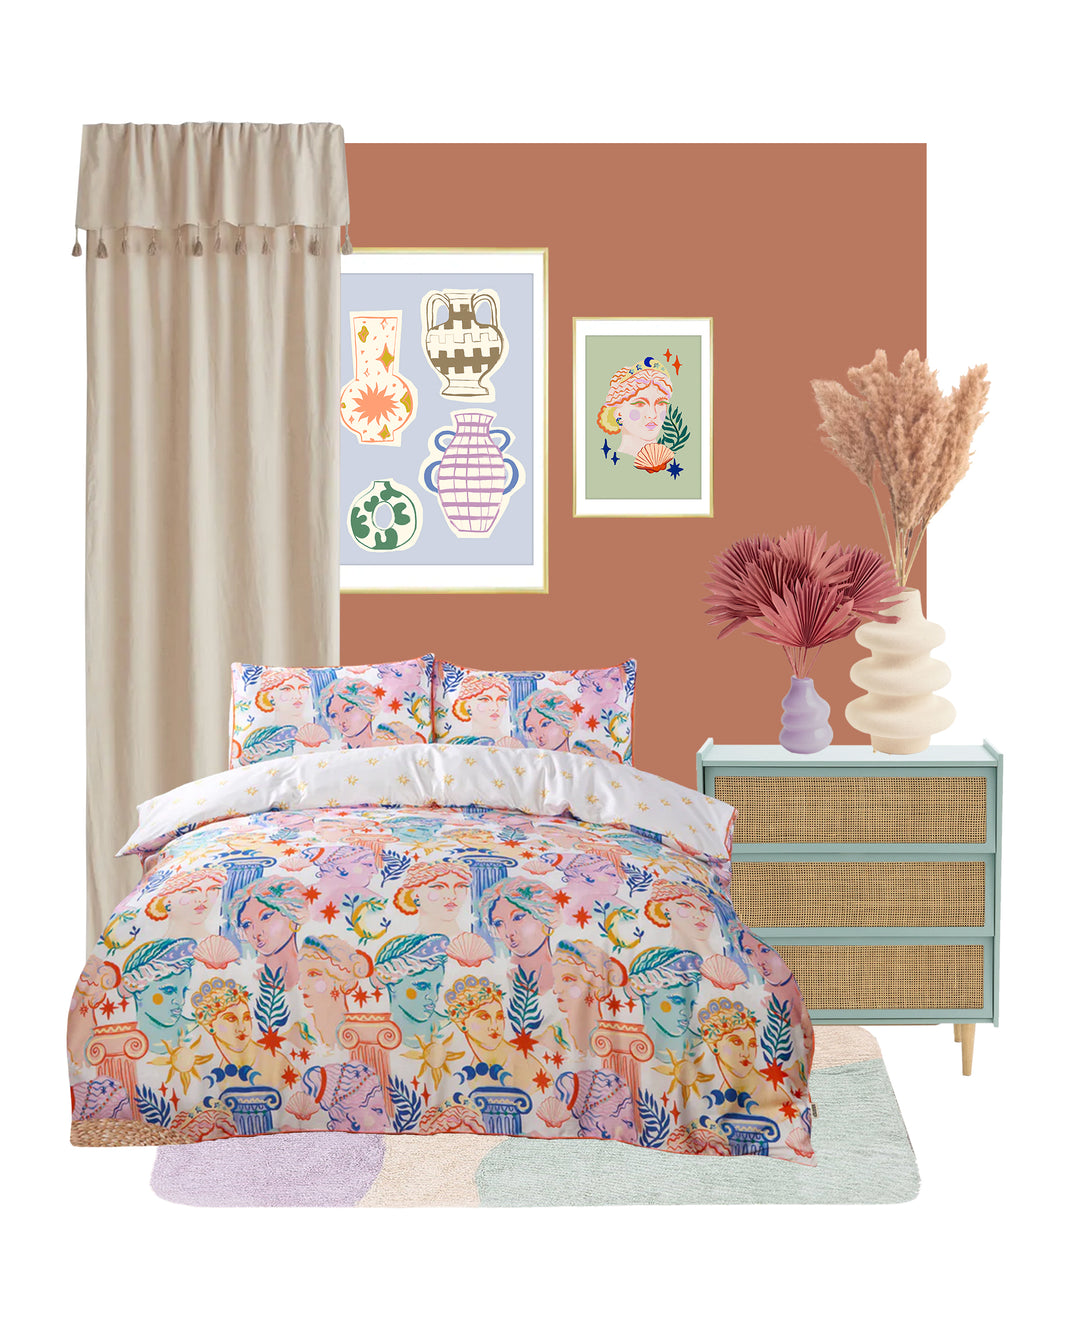 Bedroom Inspo: Summer Goddess